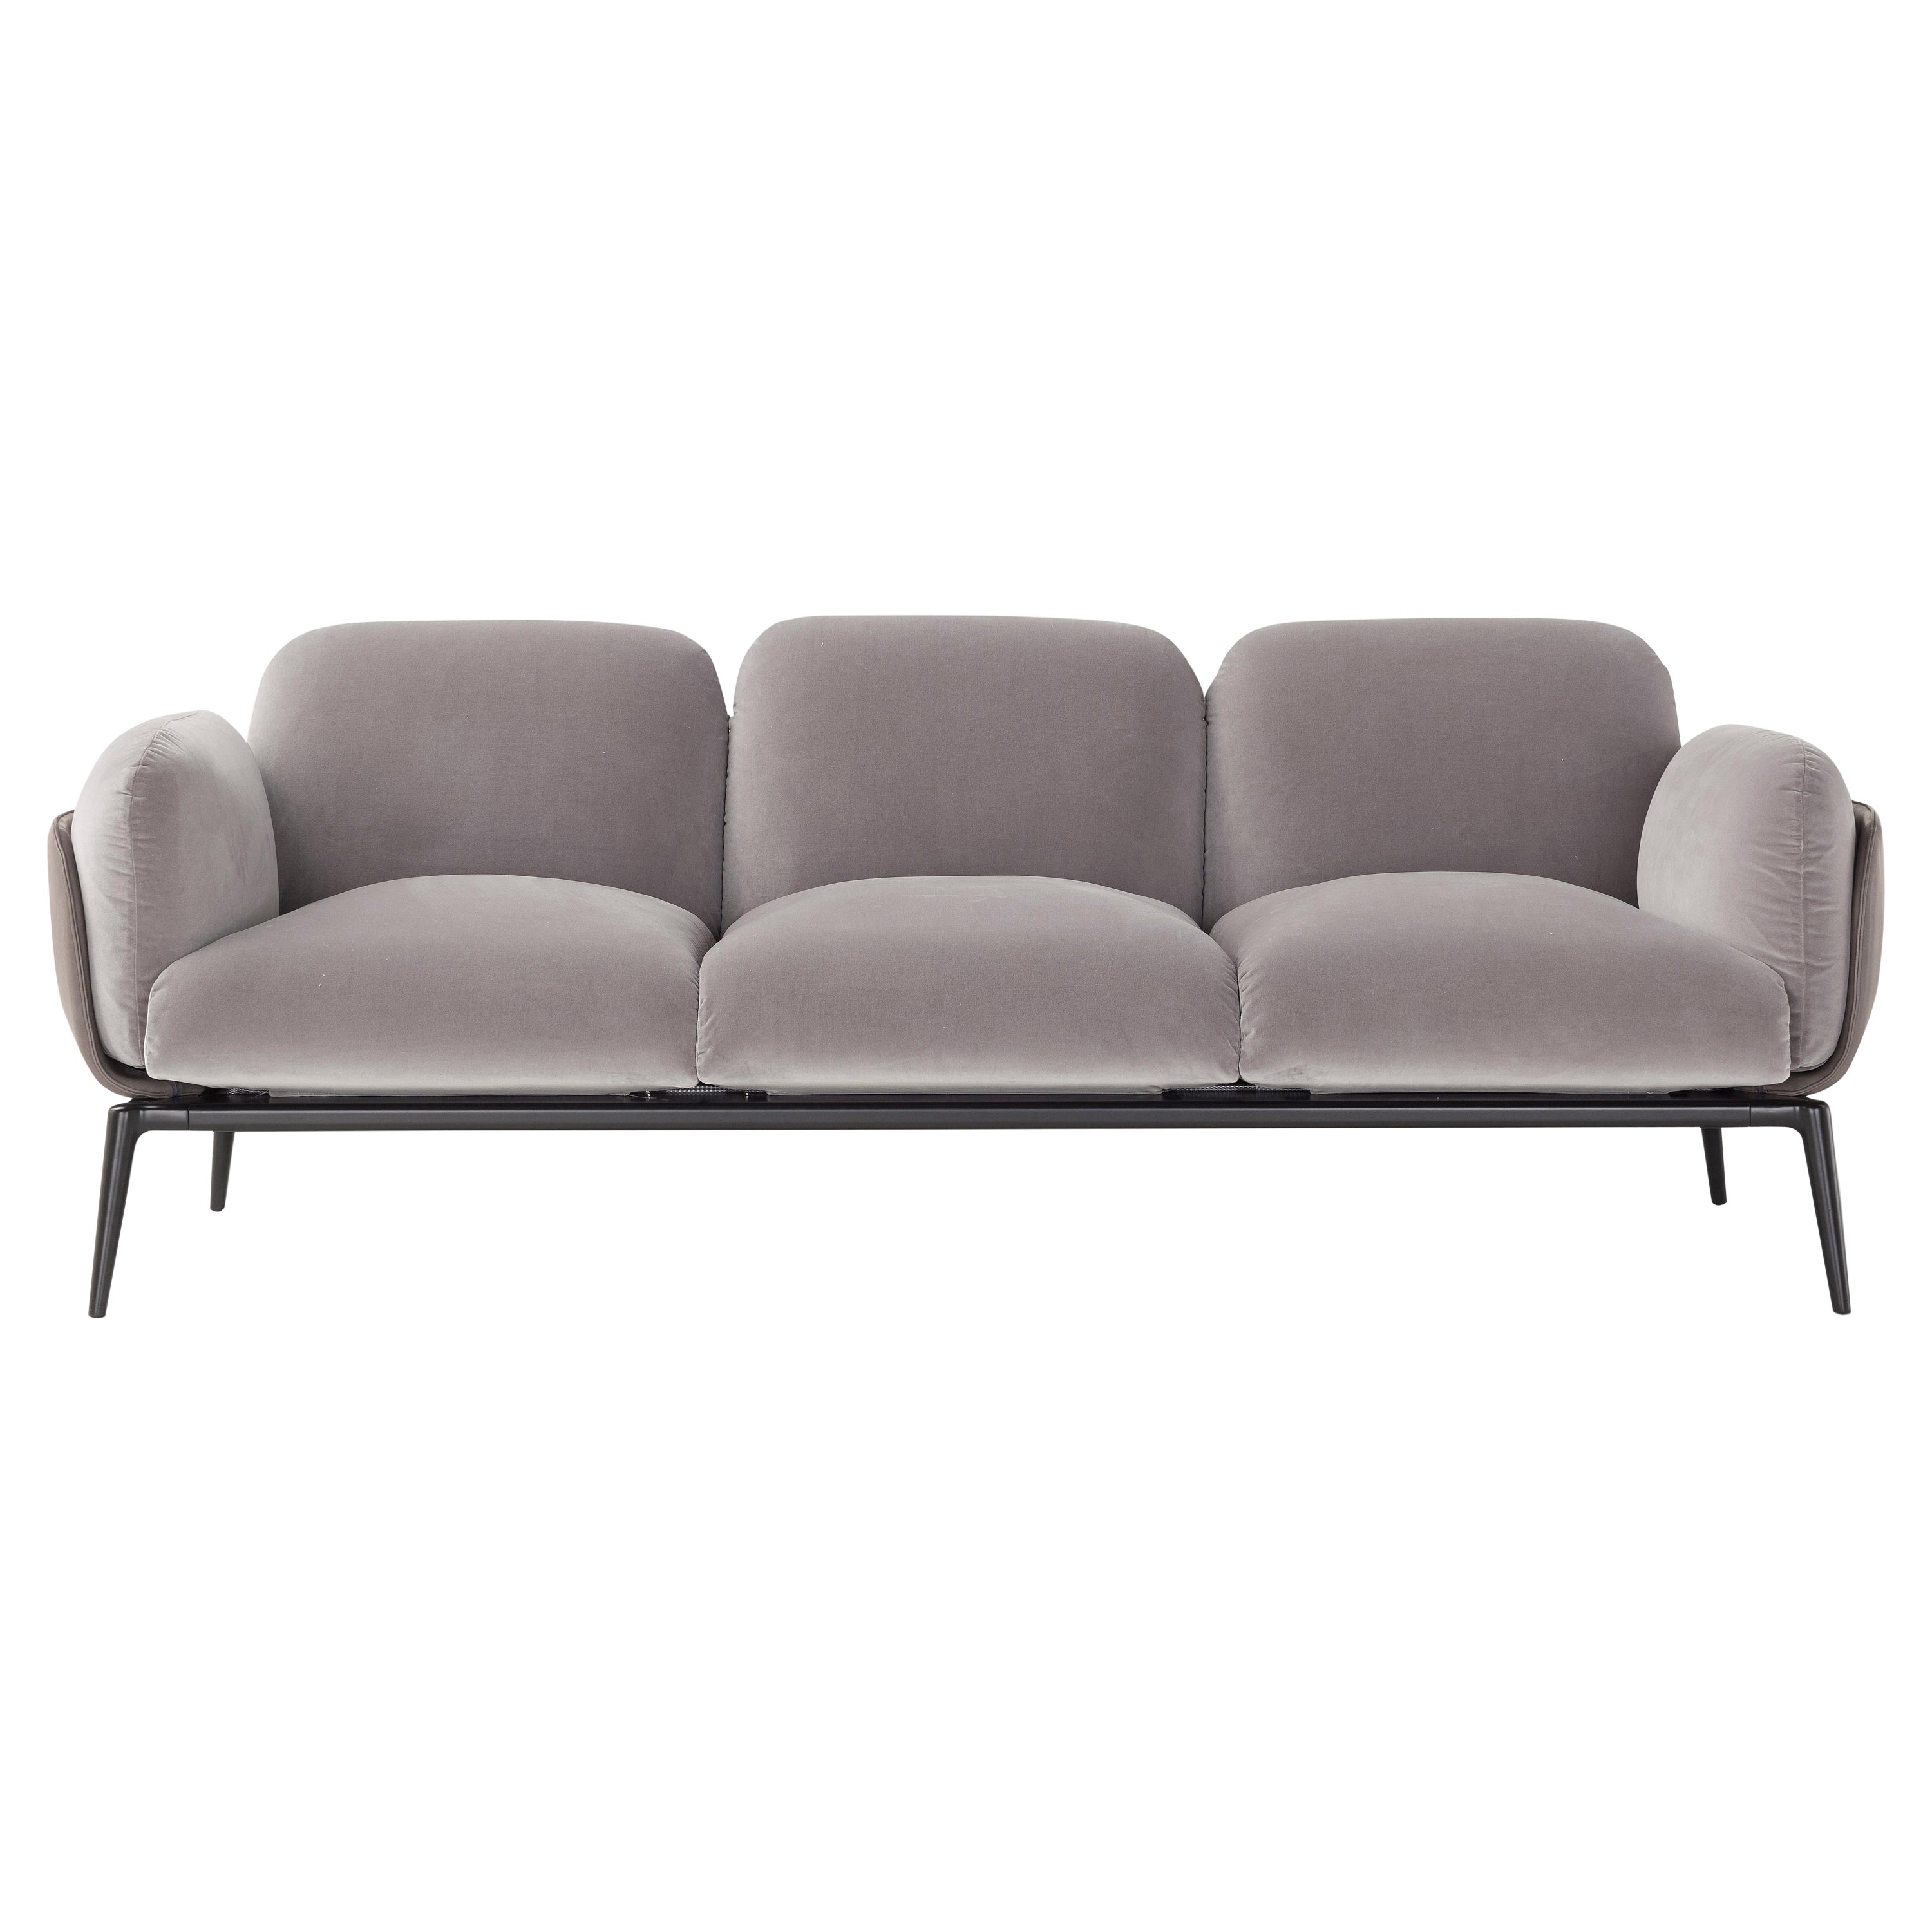 Amura 'Brooklyn' 3-Seat Sofa in Tan Leather and Velvet by Stefano Bigi